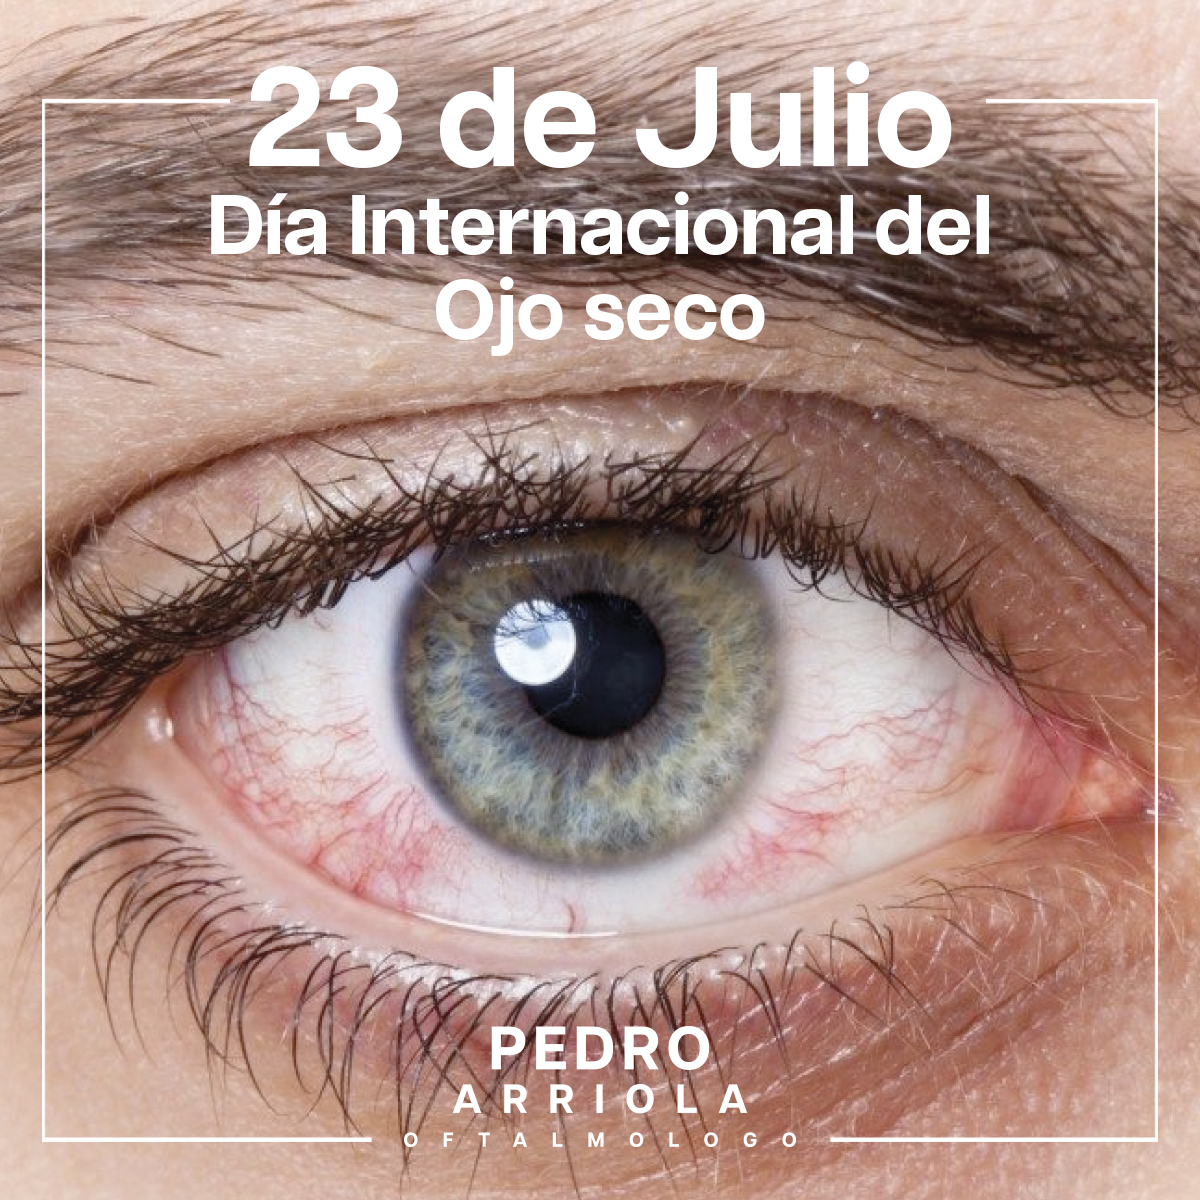 #diamundial #diamundialdelojoseco #ojoseco #cornea #salud #saludocular #oftalmologo #oftalmologia #ophthalmologist #ocularsurface #dr #doctor